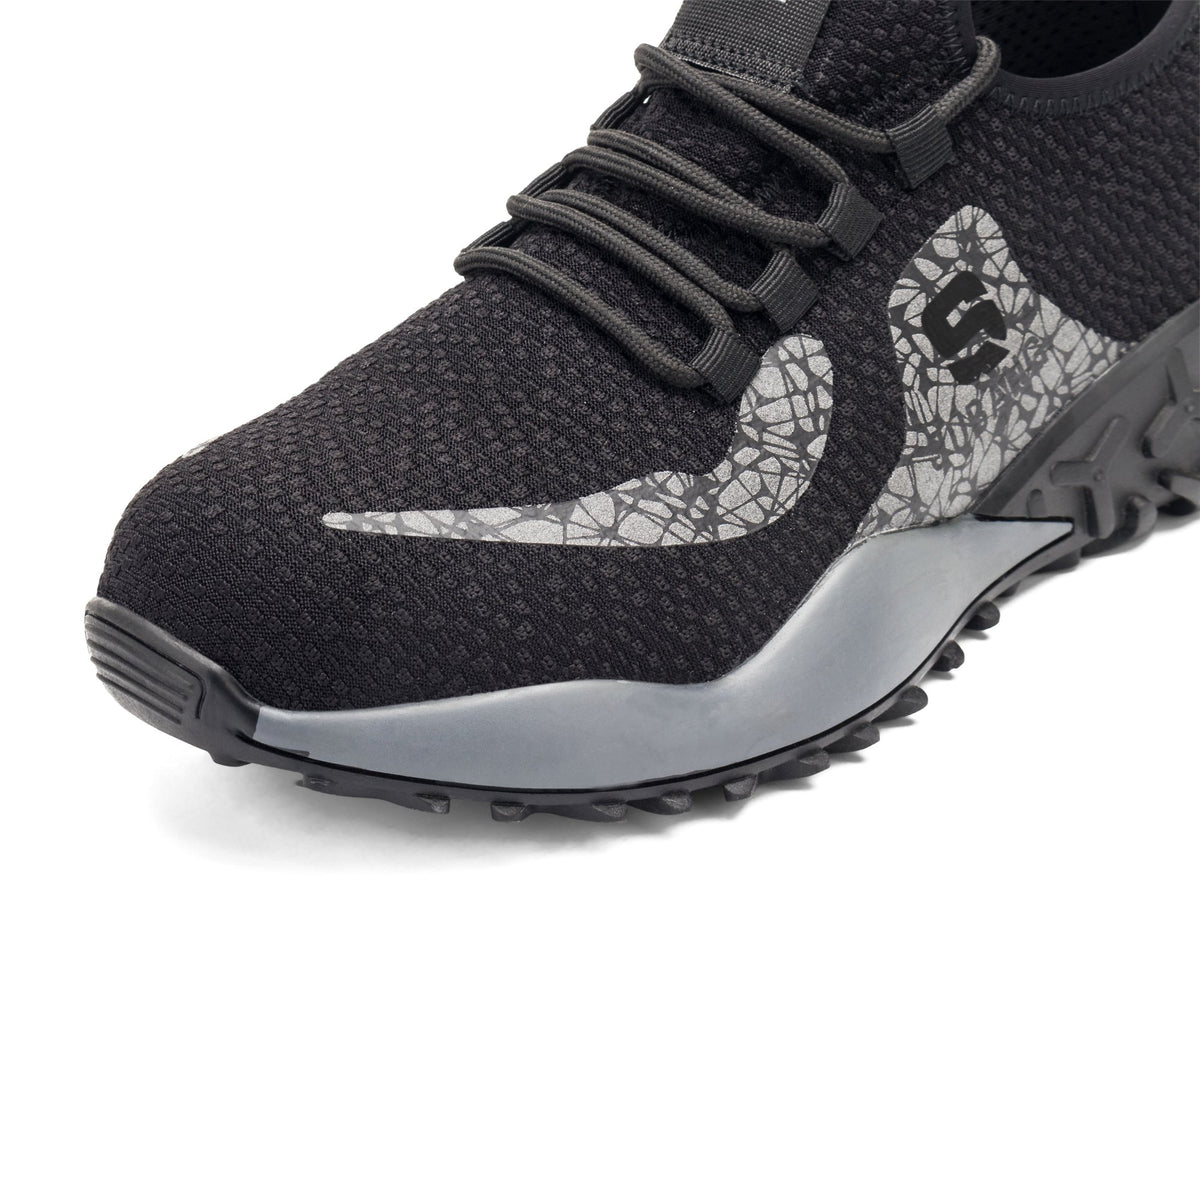 S Series Black Grey - Indestructible Shoes